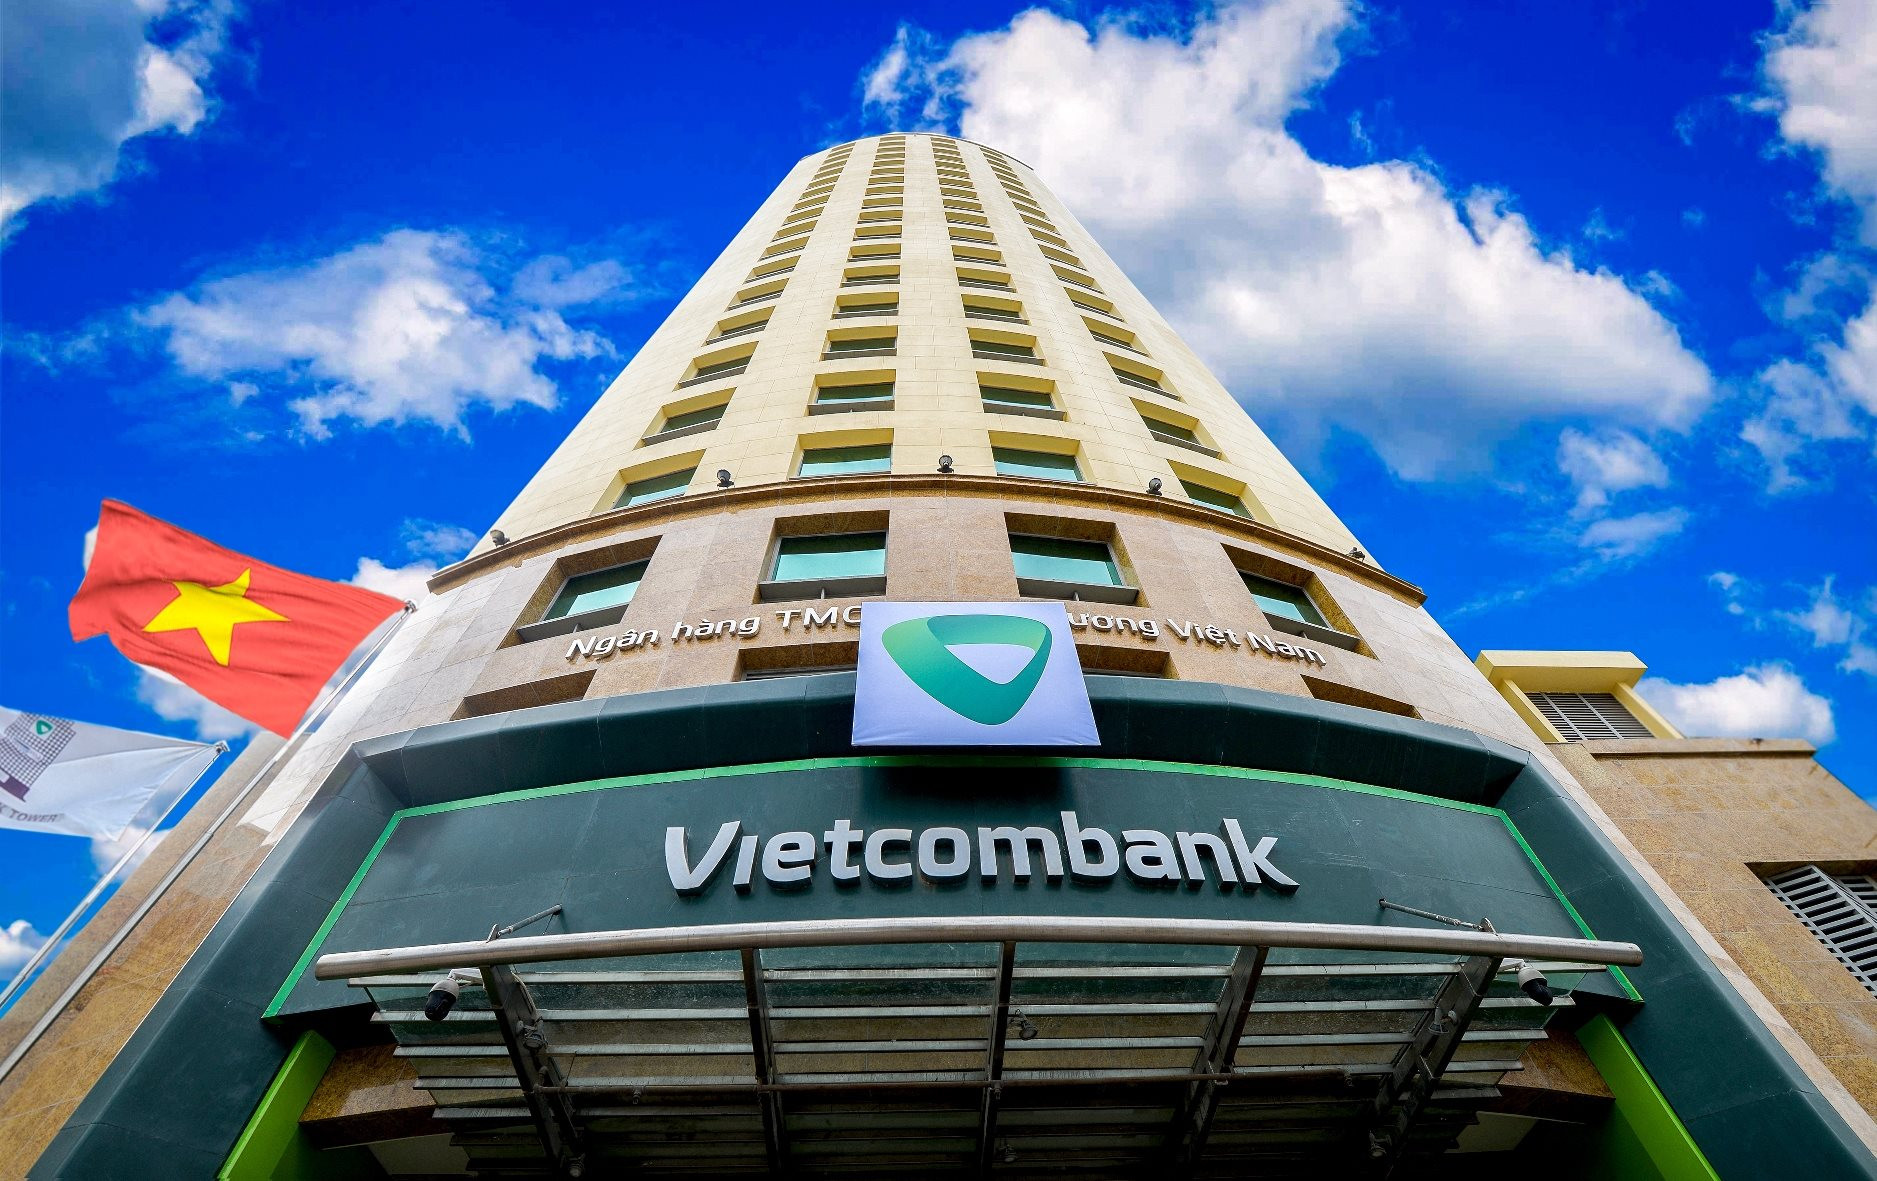 vietcombank_toa-nha-tru-so-chinh-1-.jpg